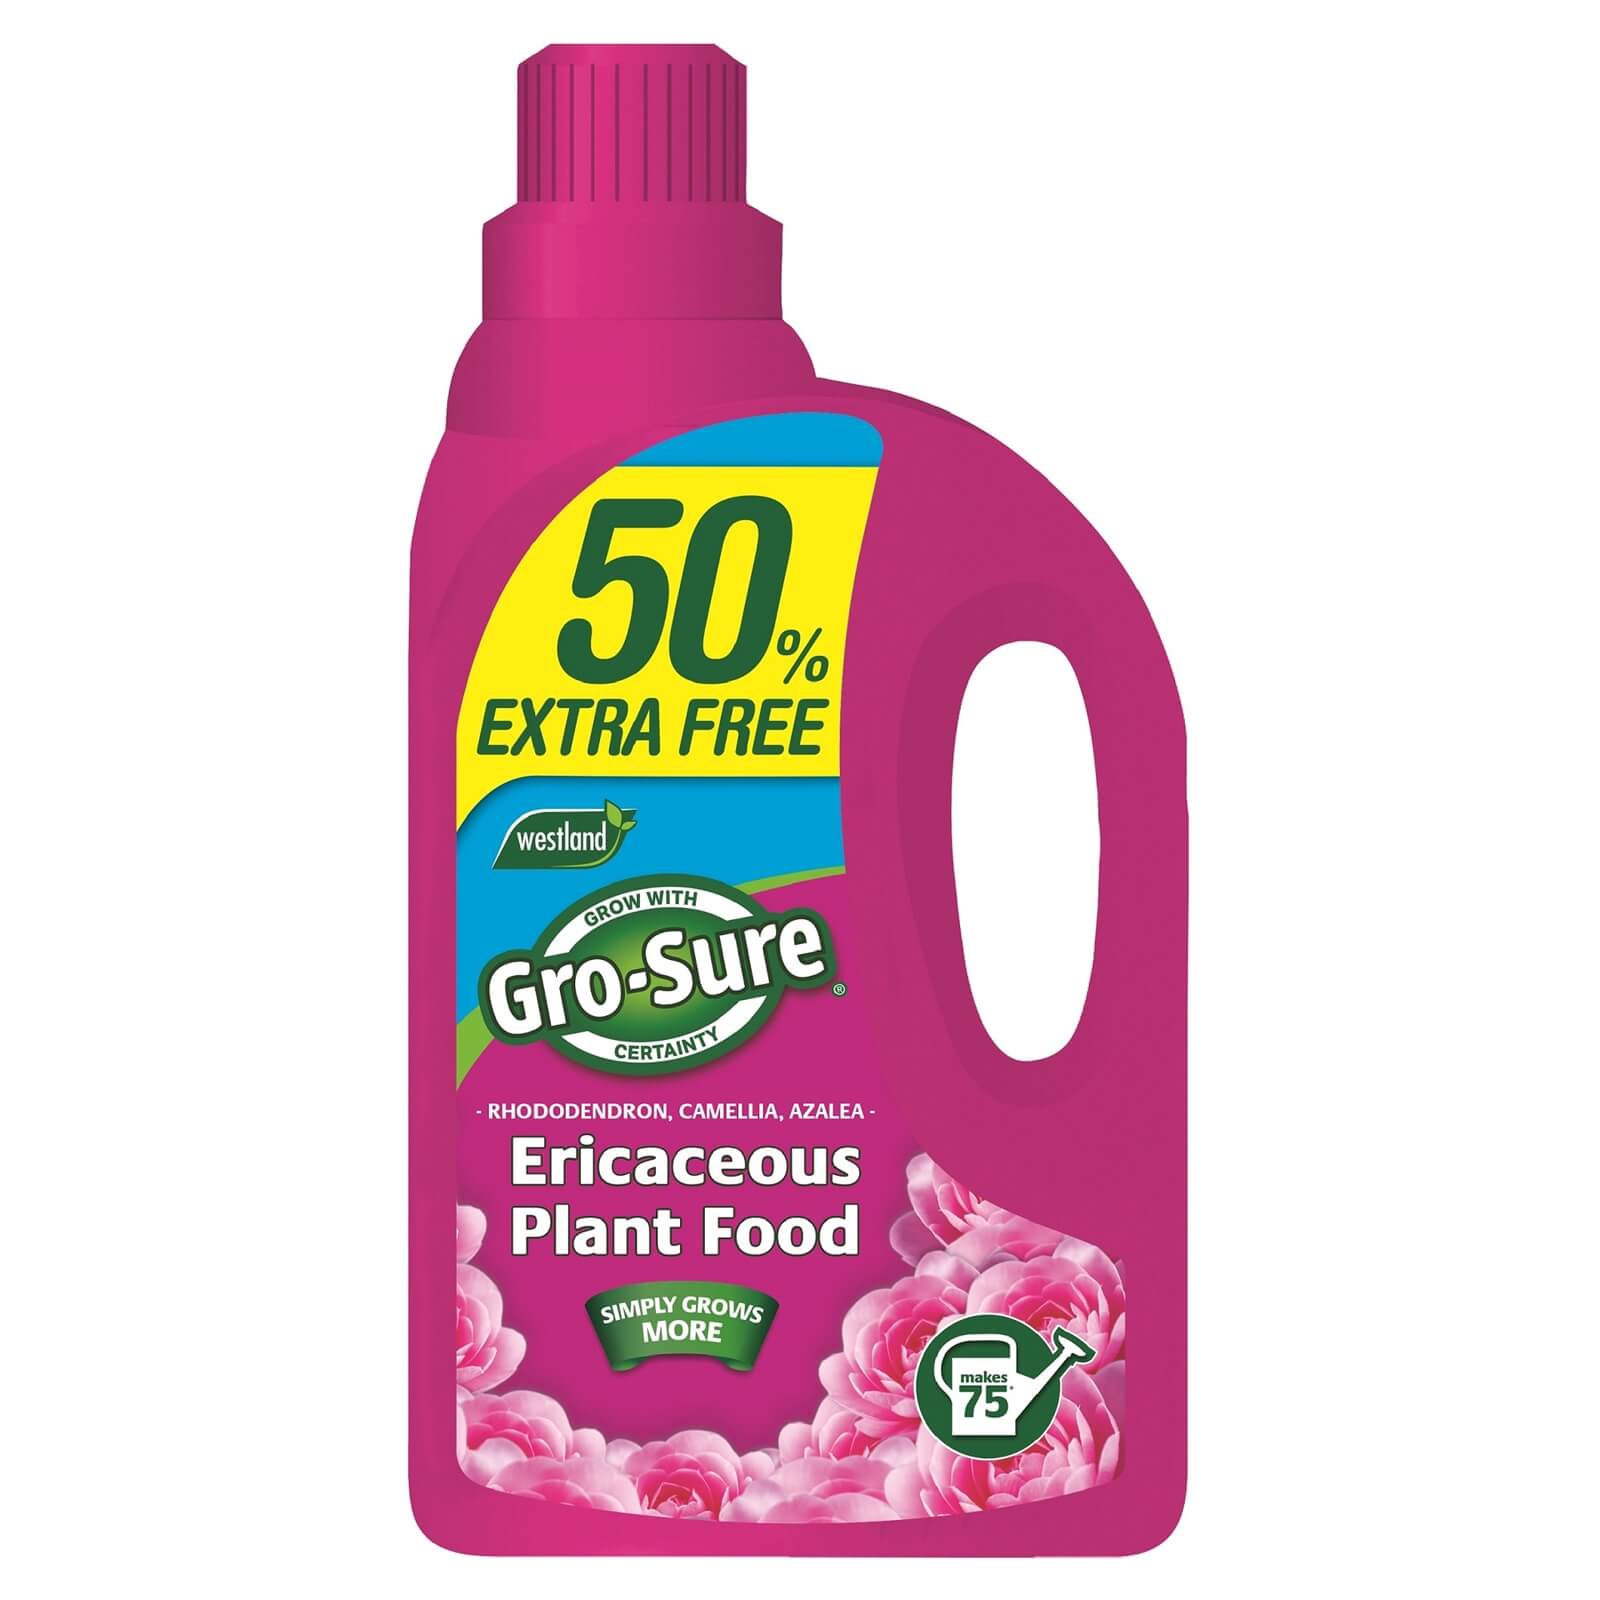 Gro-Sure Ericaceous Concentrated Plant Food Liquid - 1.5L